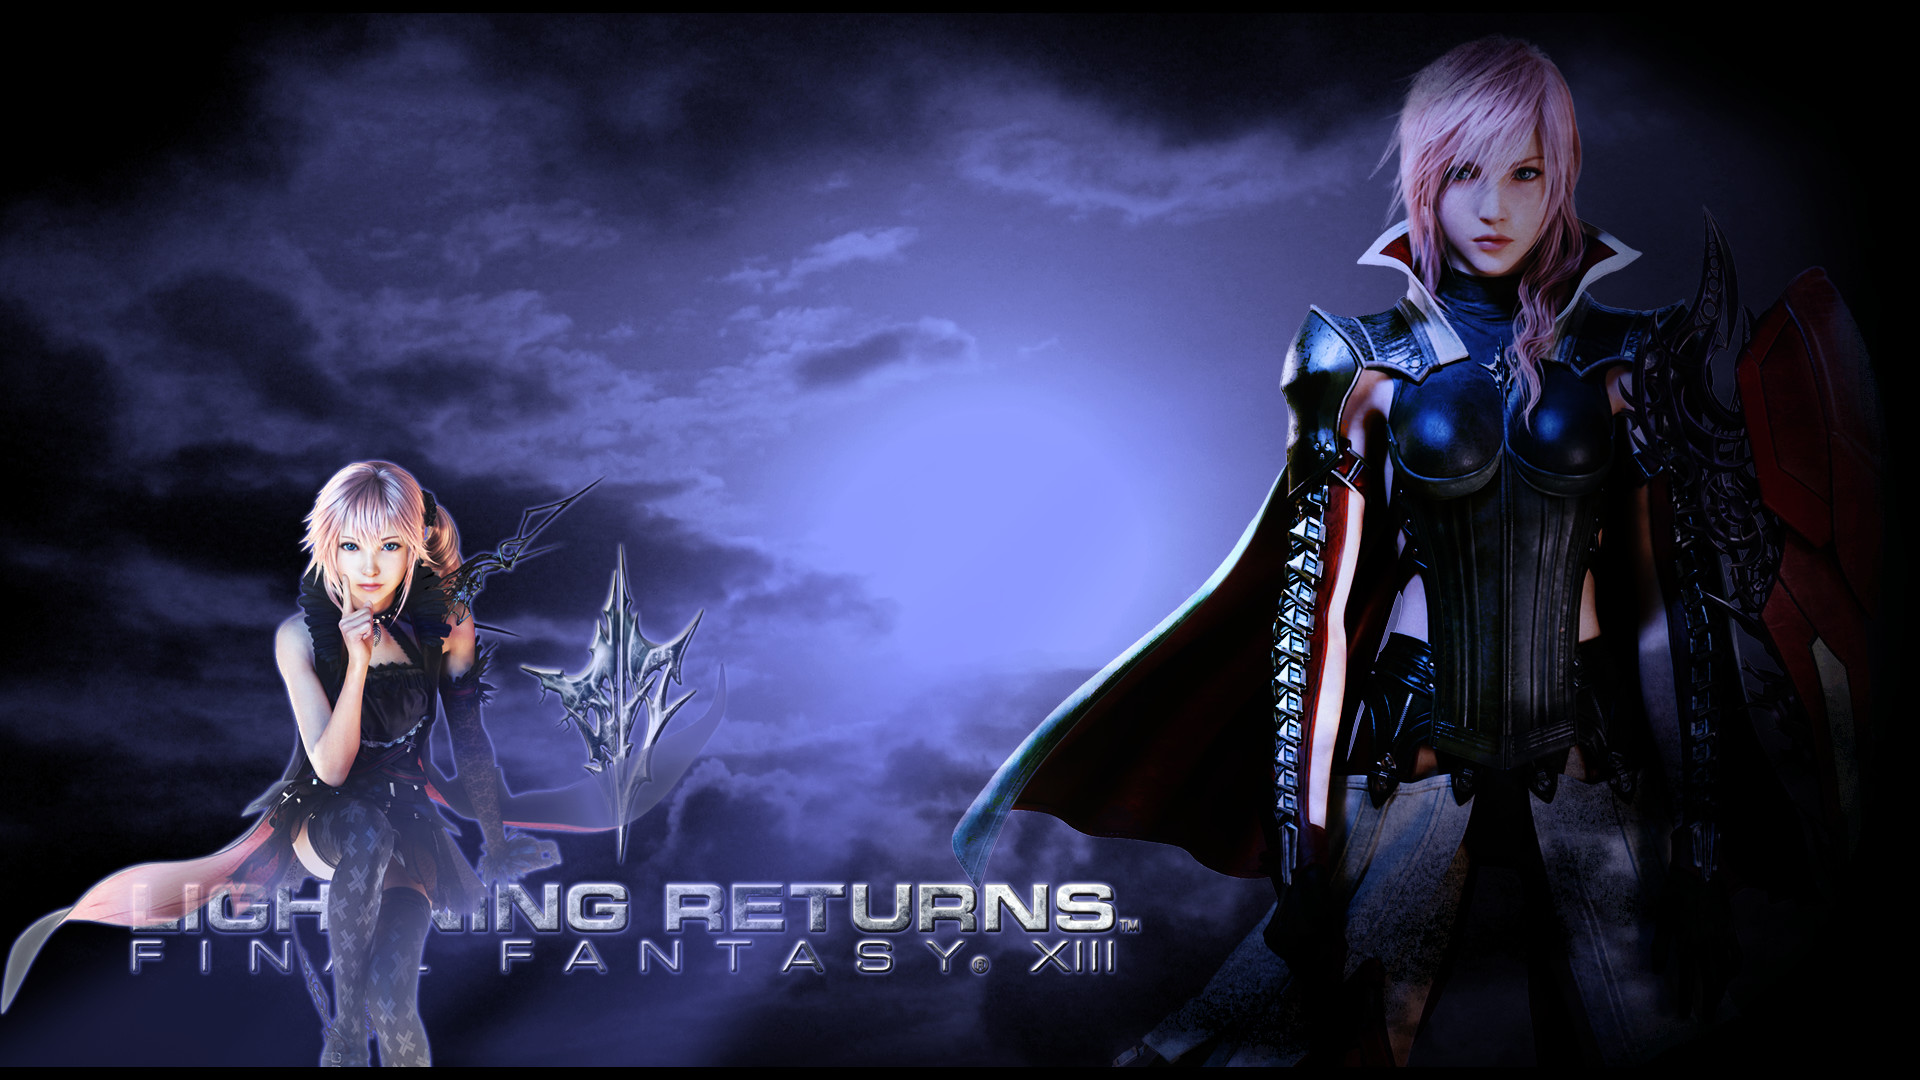 1920x1080 ... Lightning Returns Final Fantasy XIII Wallpaper! by thegr8tani